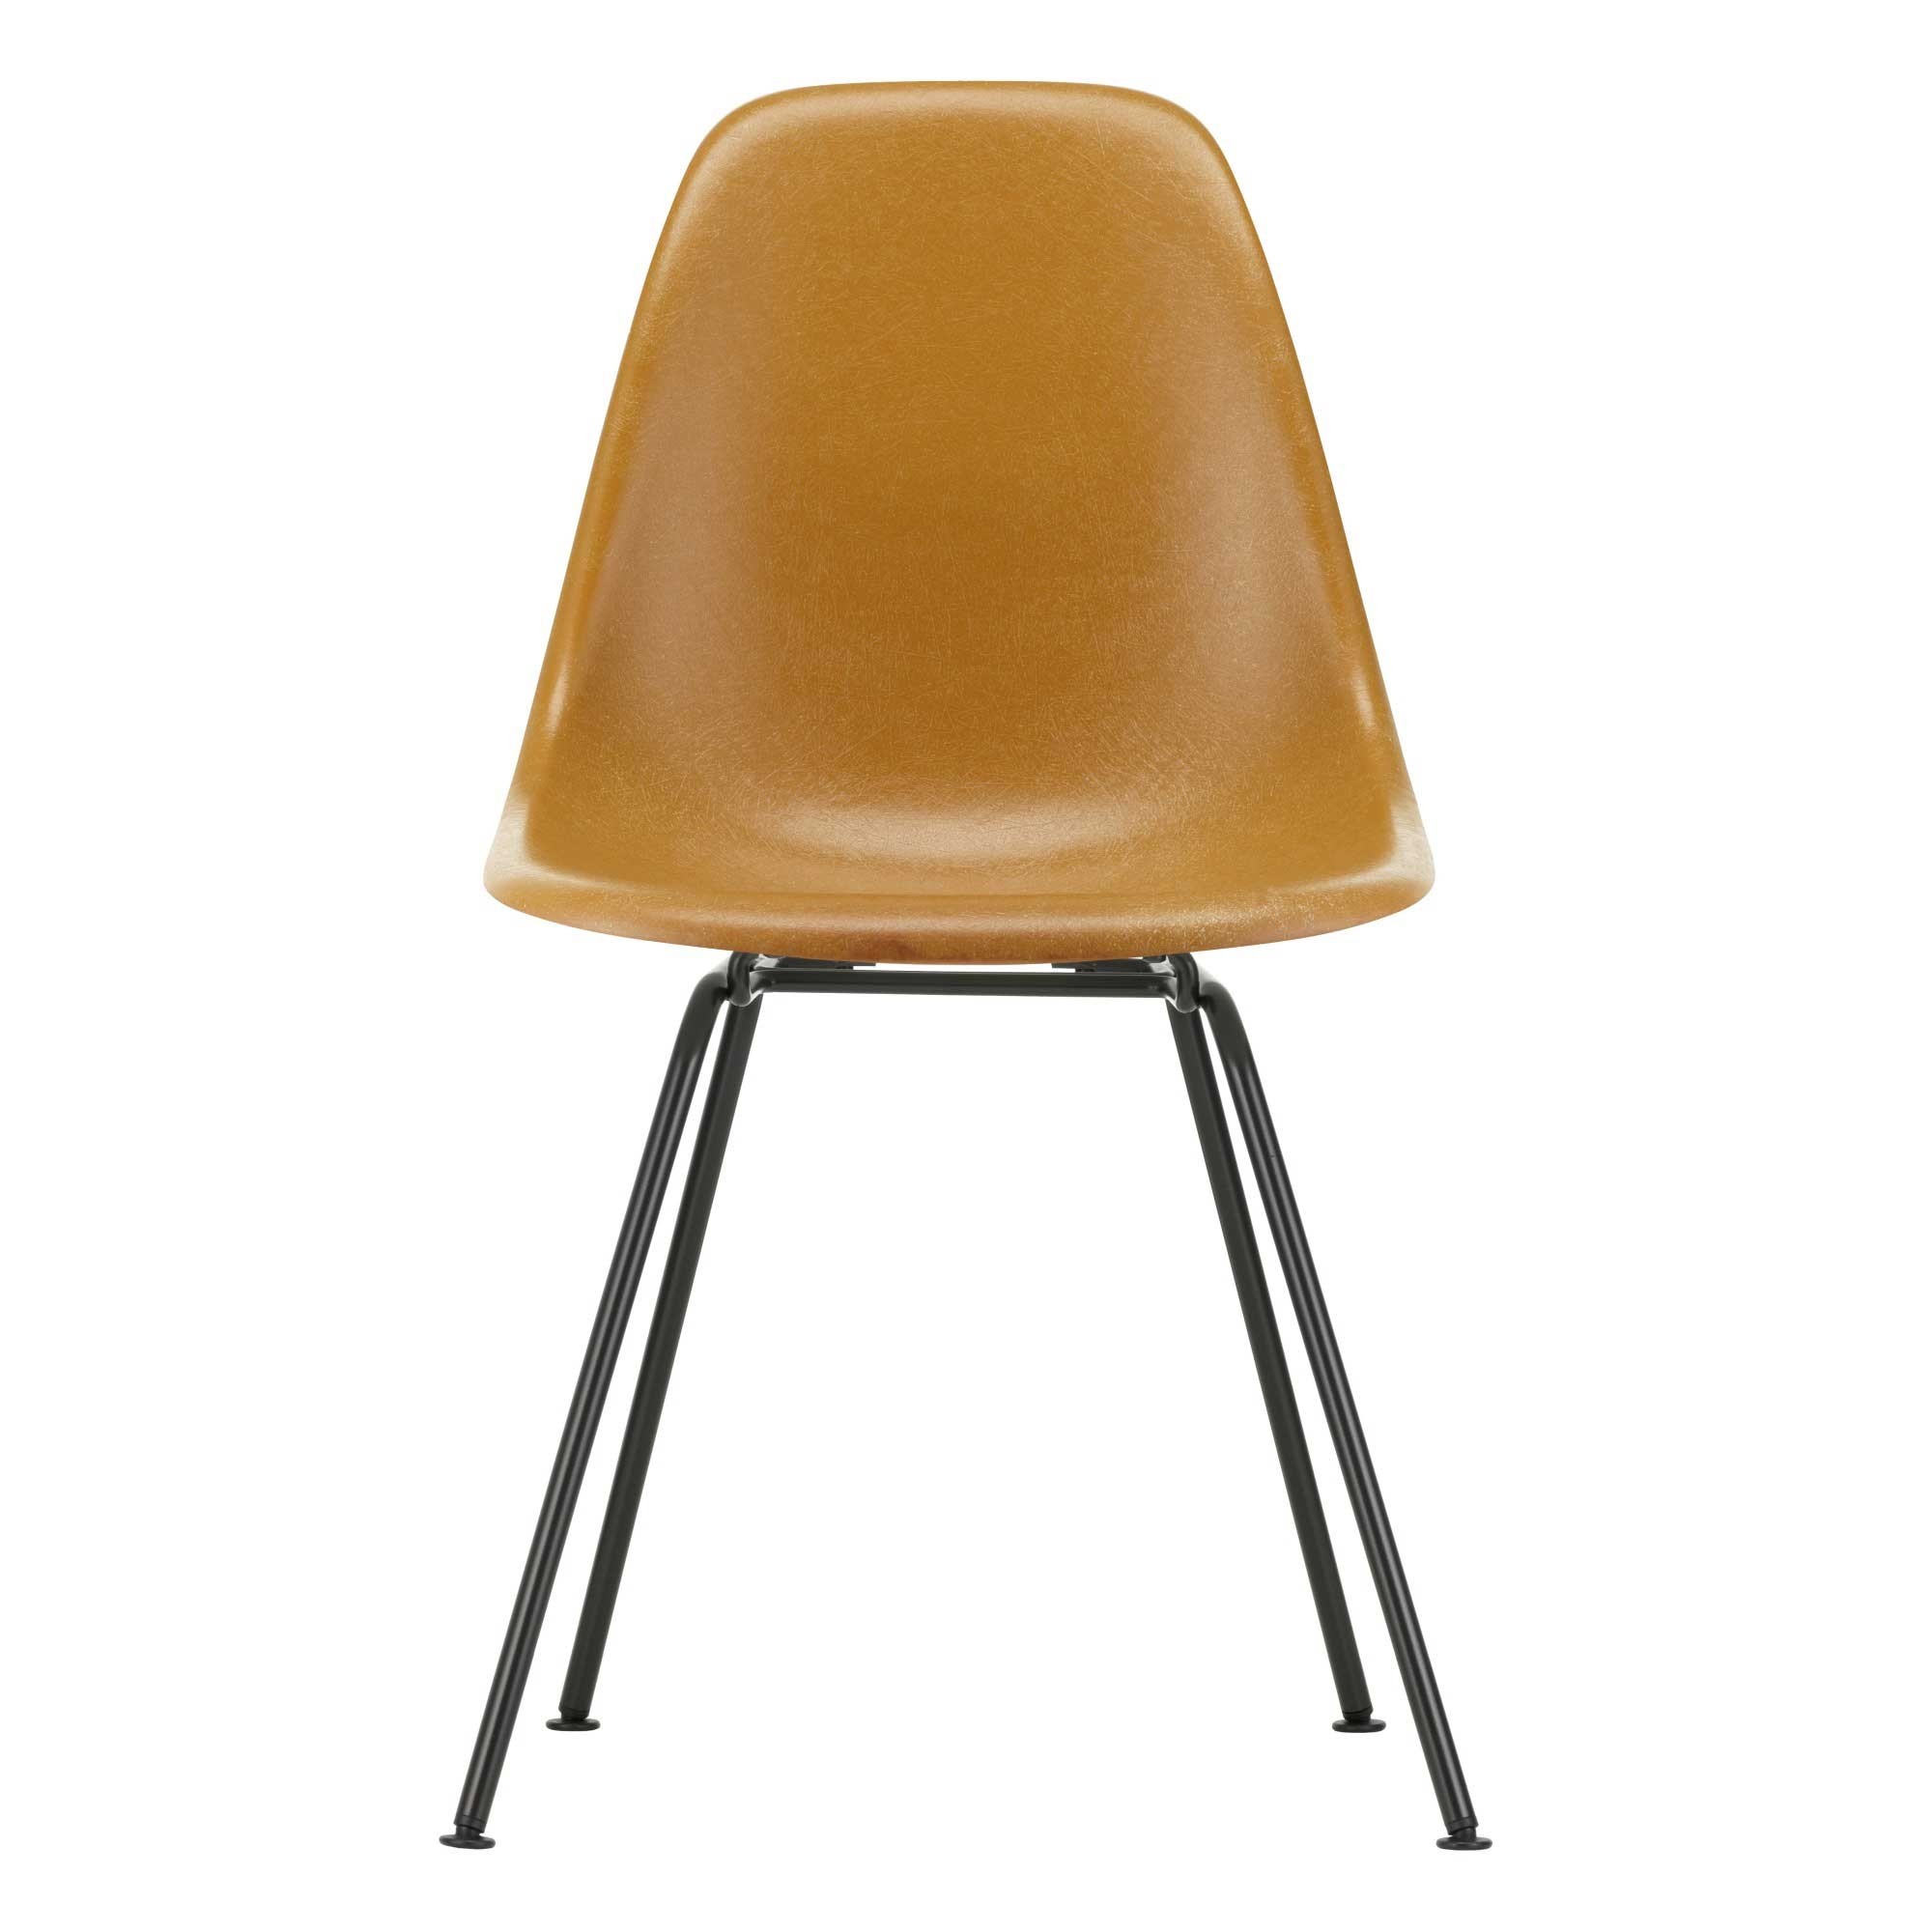 Perfect Margaret Mitchell pedaal Vitra Eames plastic chair DSX Chair | Deplain.com